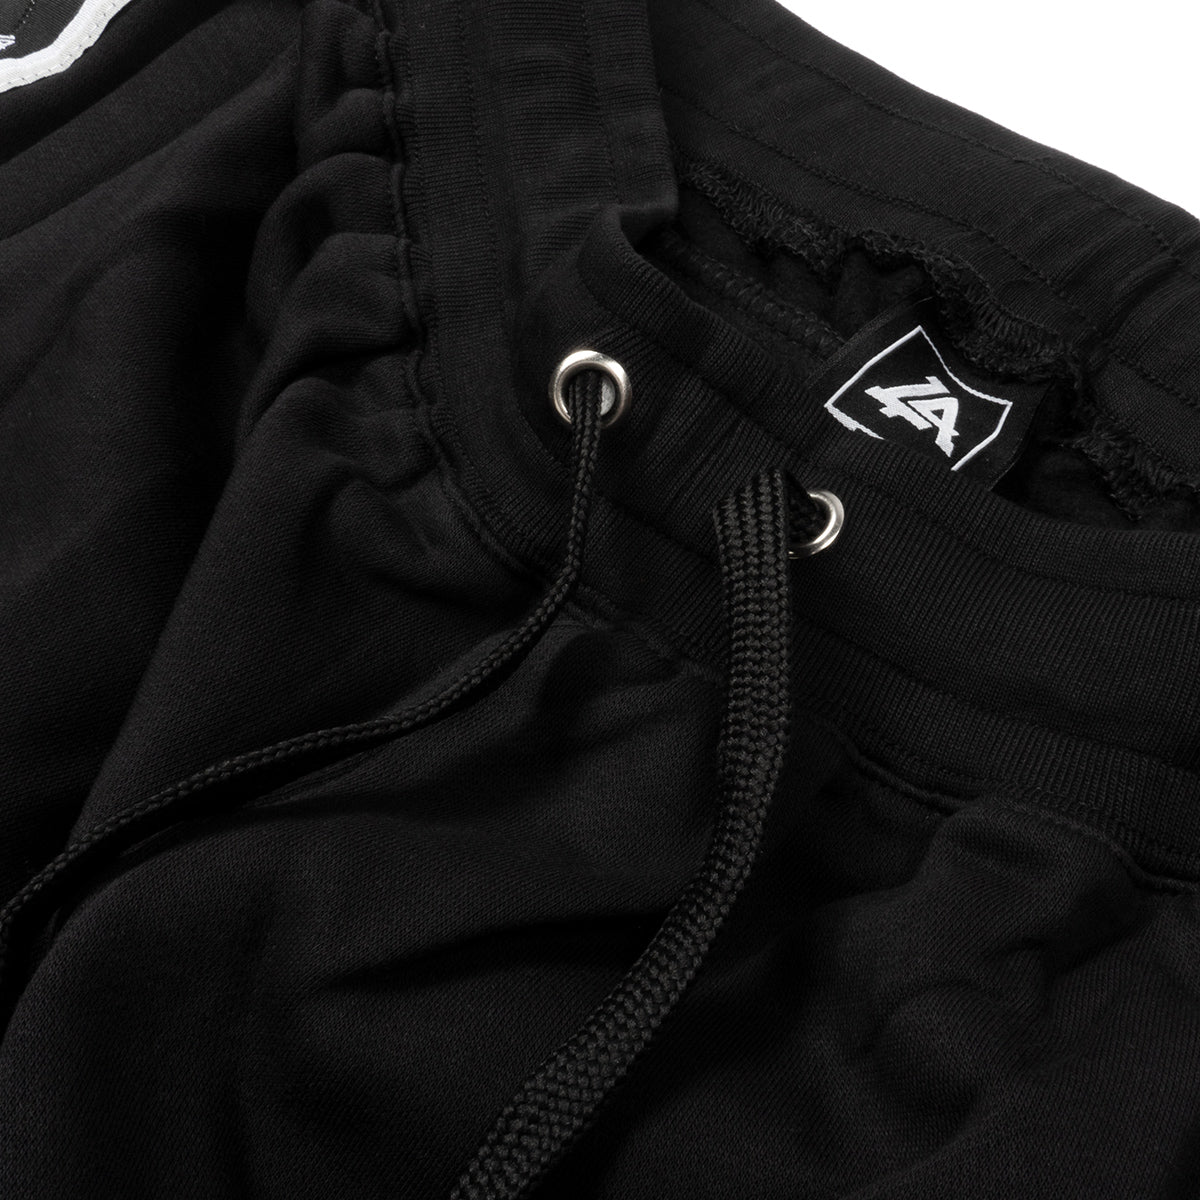 Lost Art Canada - black leisure suit sweatsuit sweatpants inside tag view